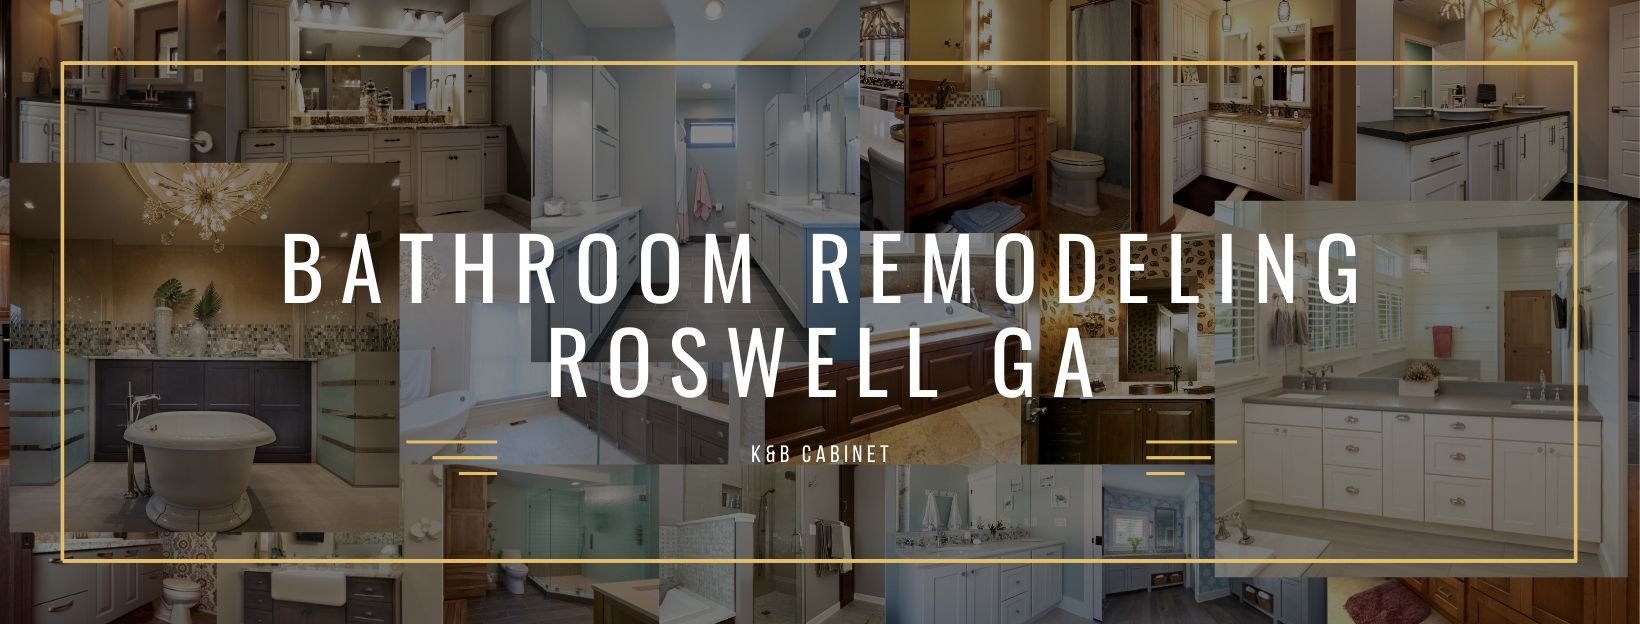 Bathroom Remodeling Roswell GA